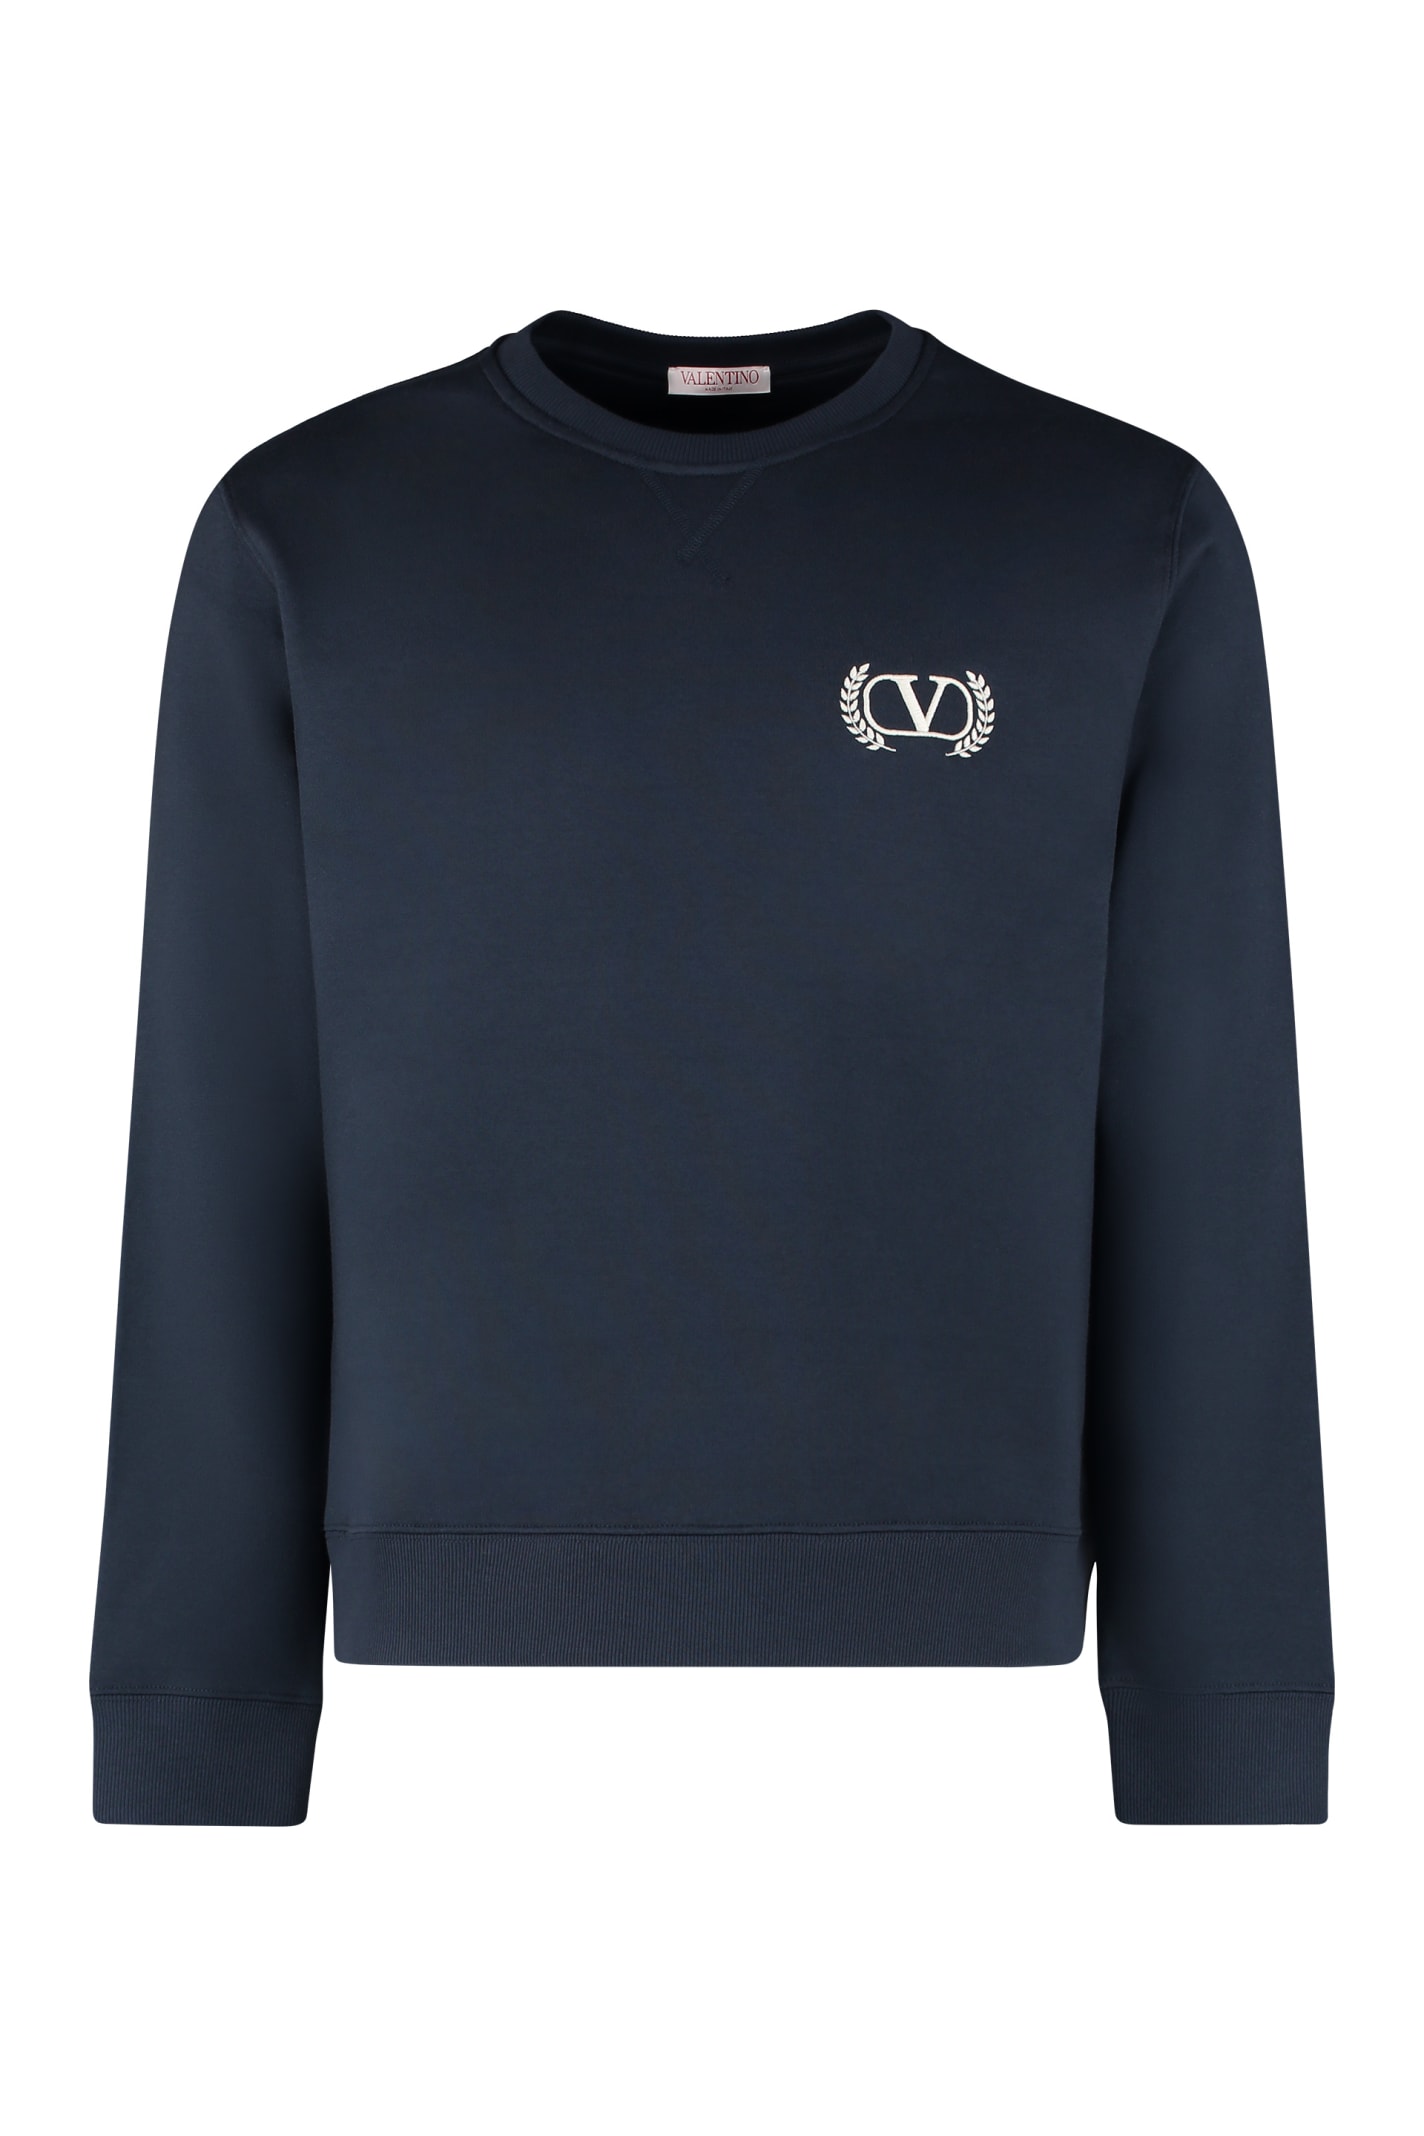 Valentino Embroidered Cotton Sweatshirt